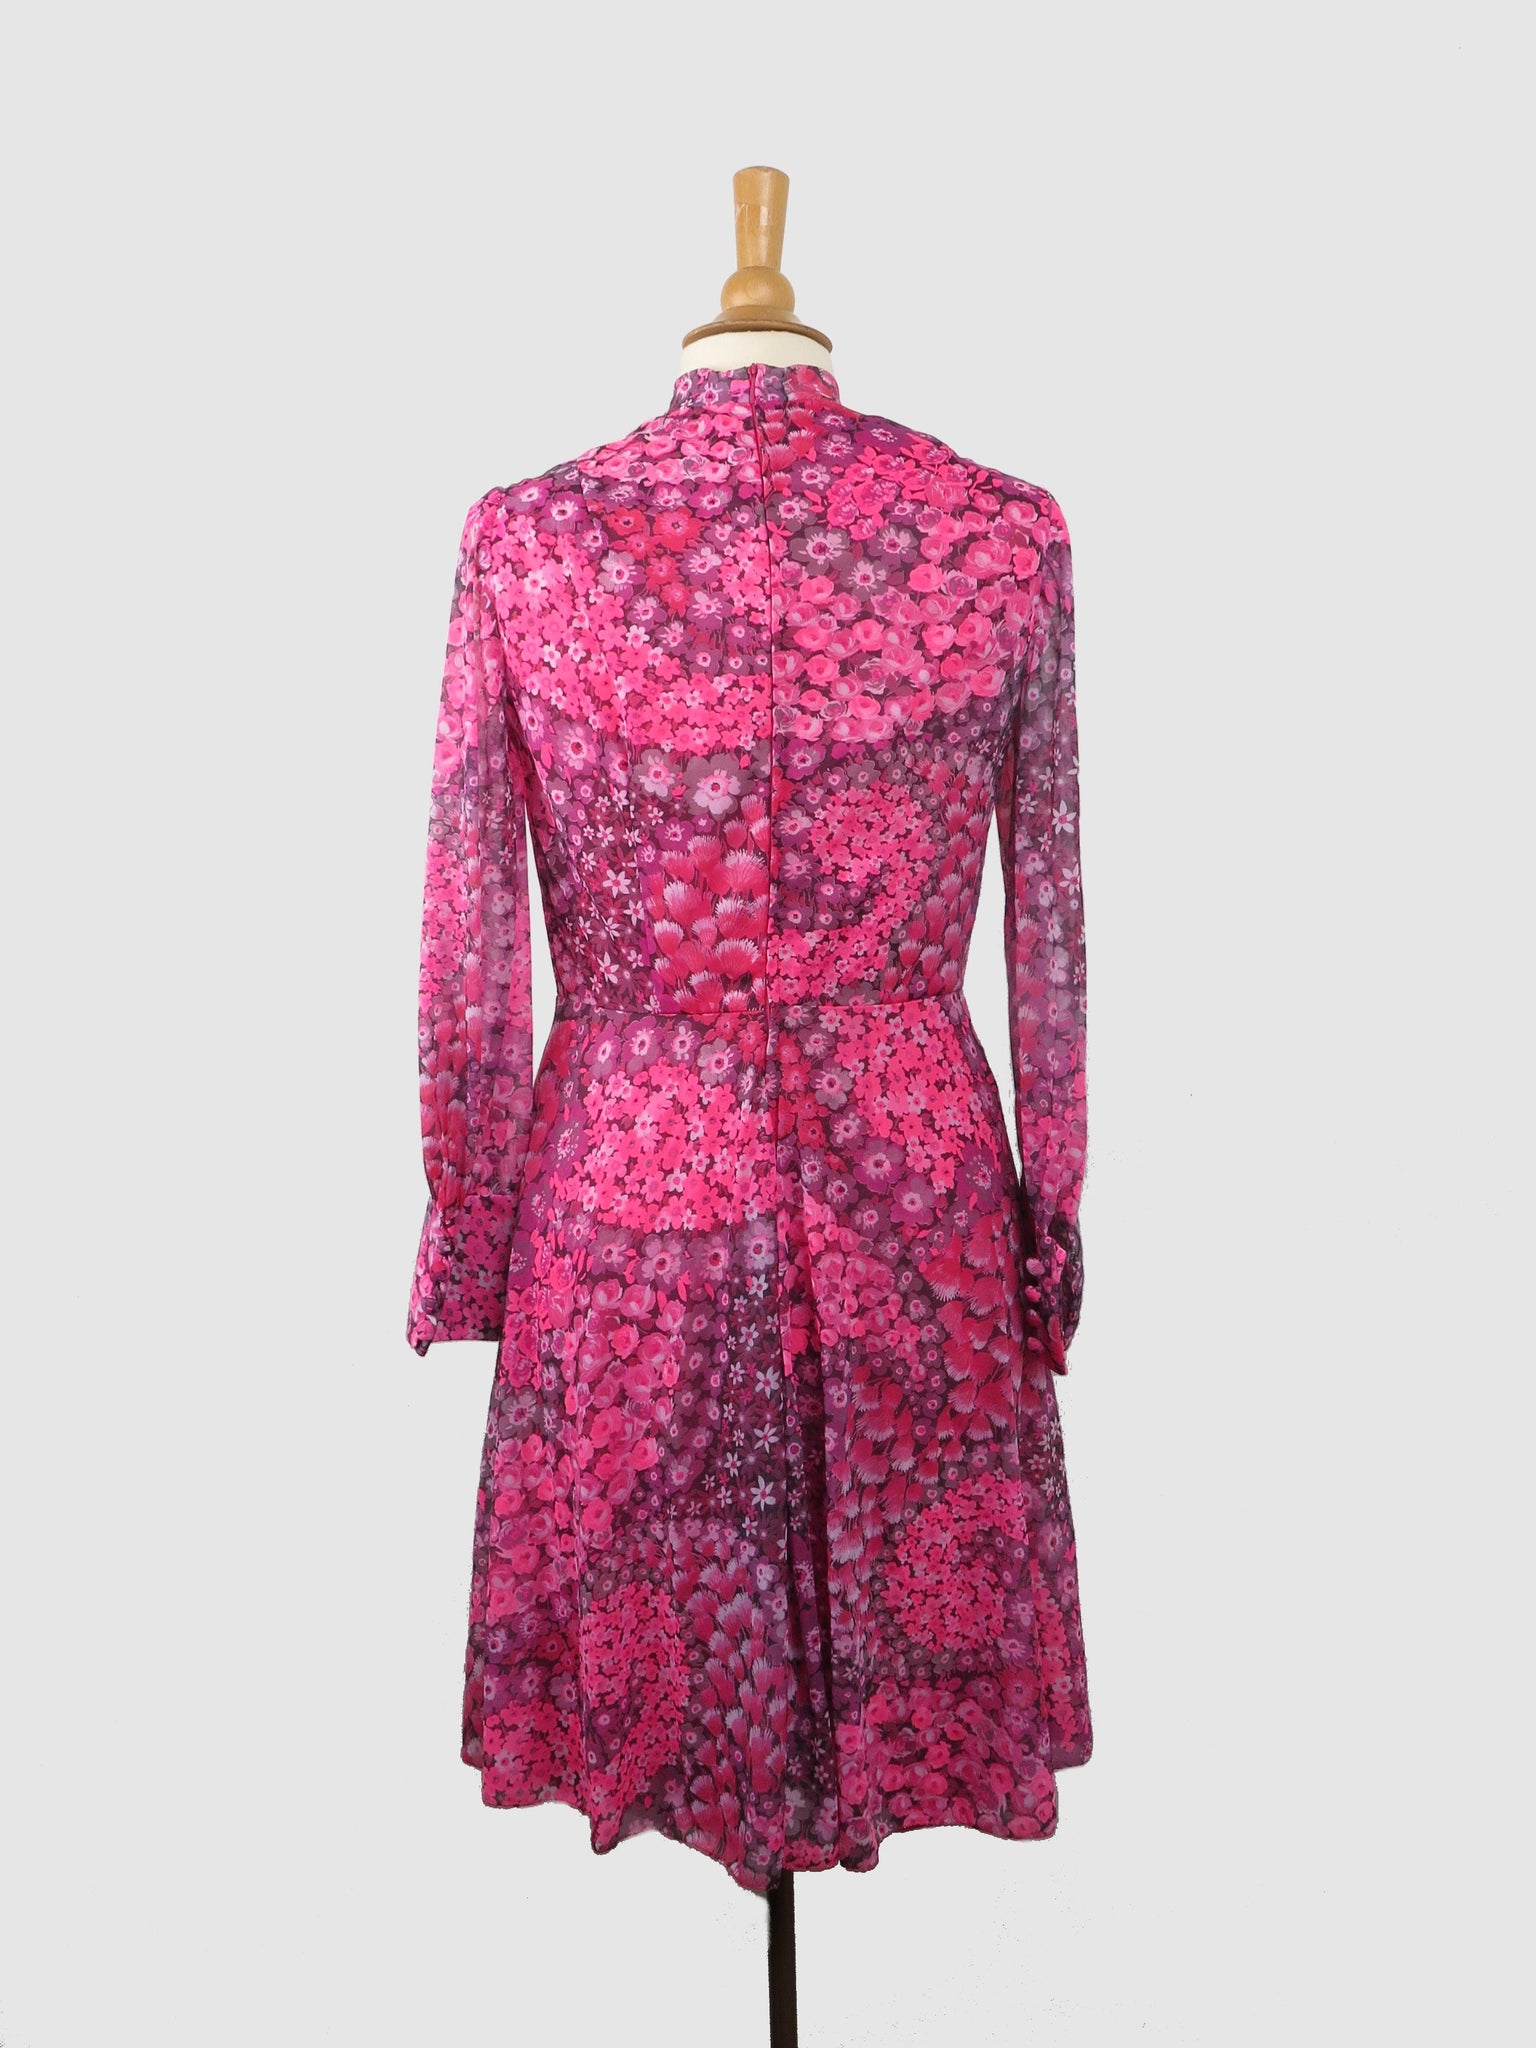 1960s Pink Vintage Dress With Floral Pattern 10/12 - The Harlequin